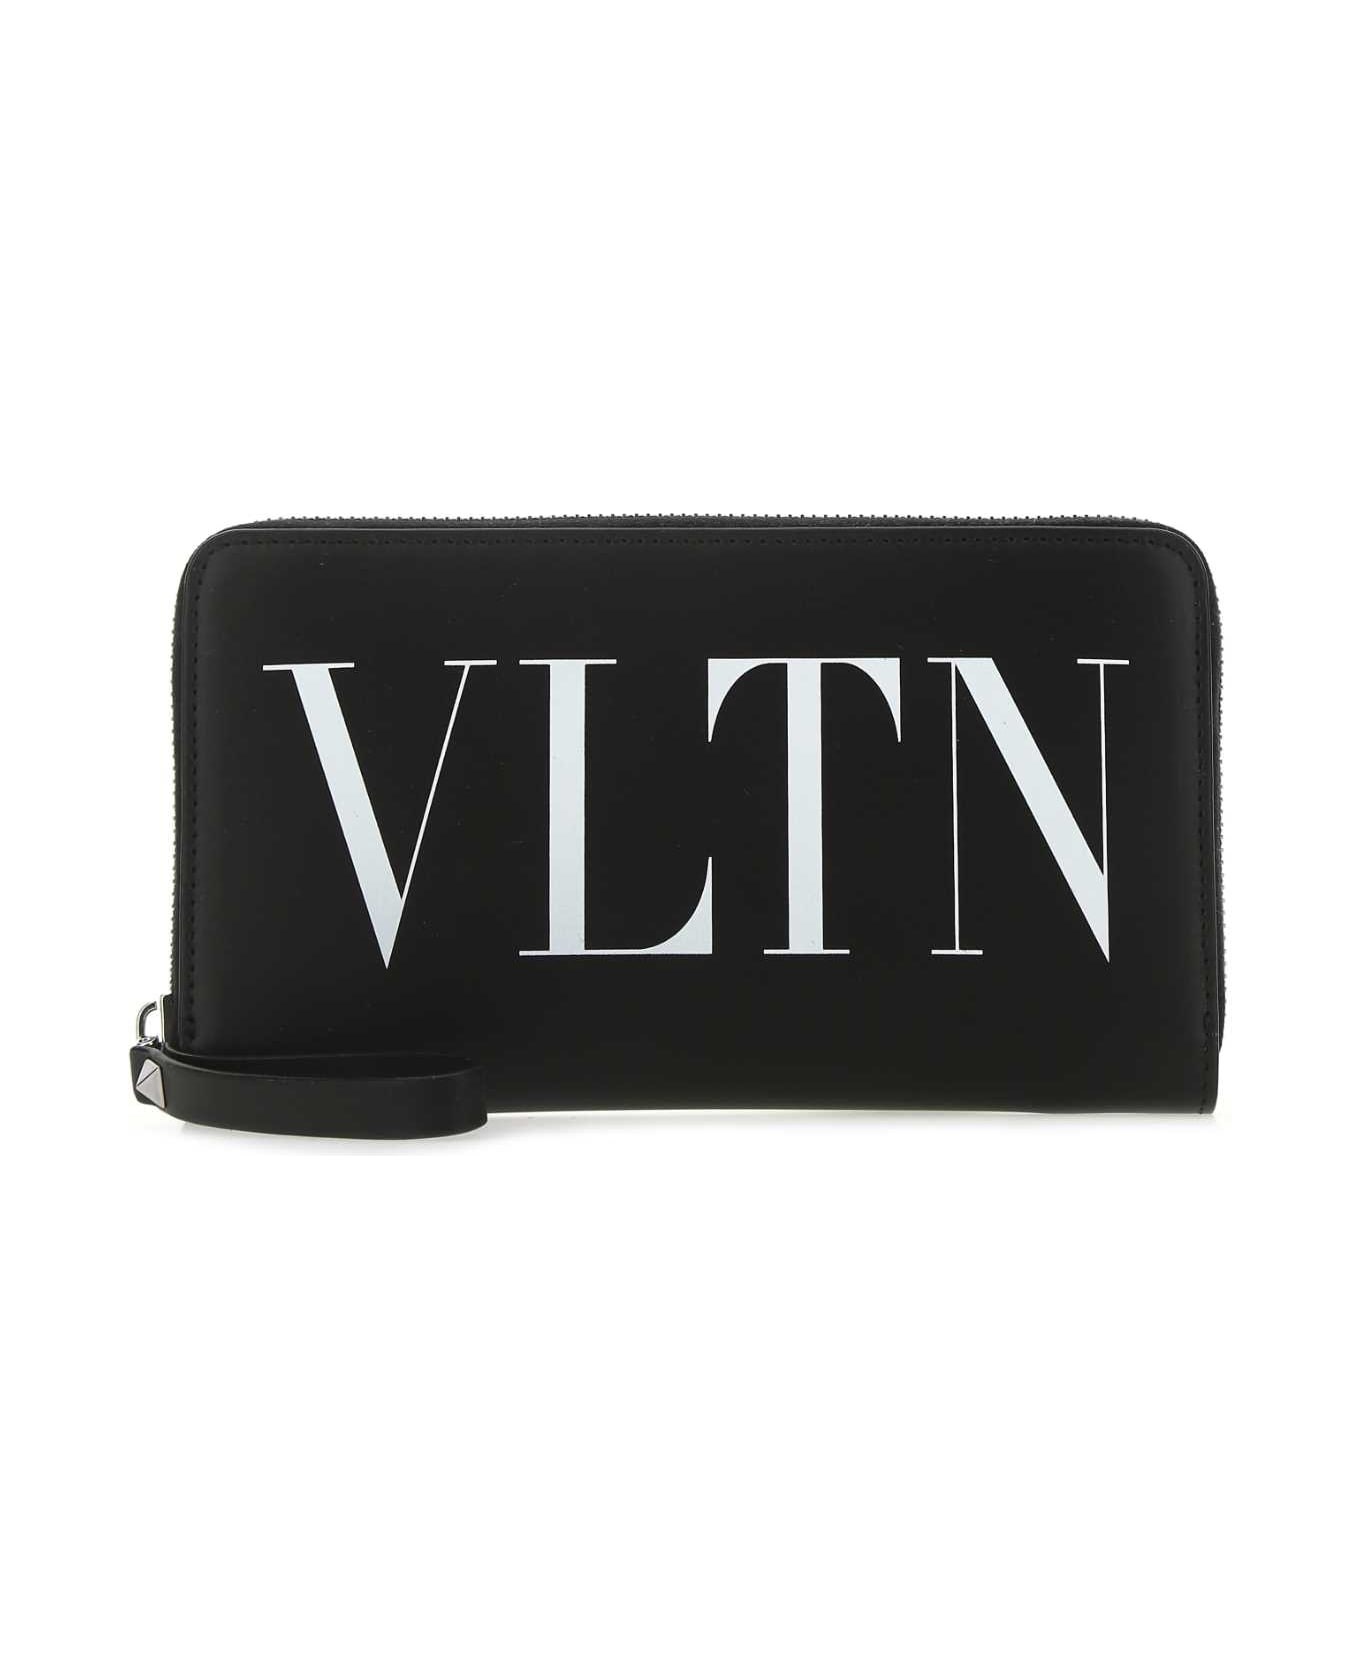 Valentino Garavani Black Leather Vltn Wallet - NERBIA 財布